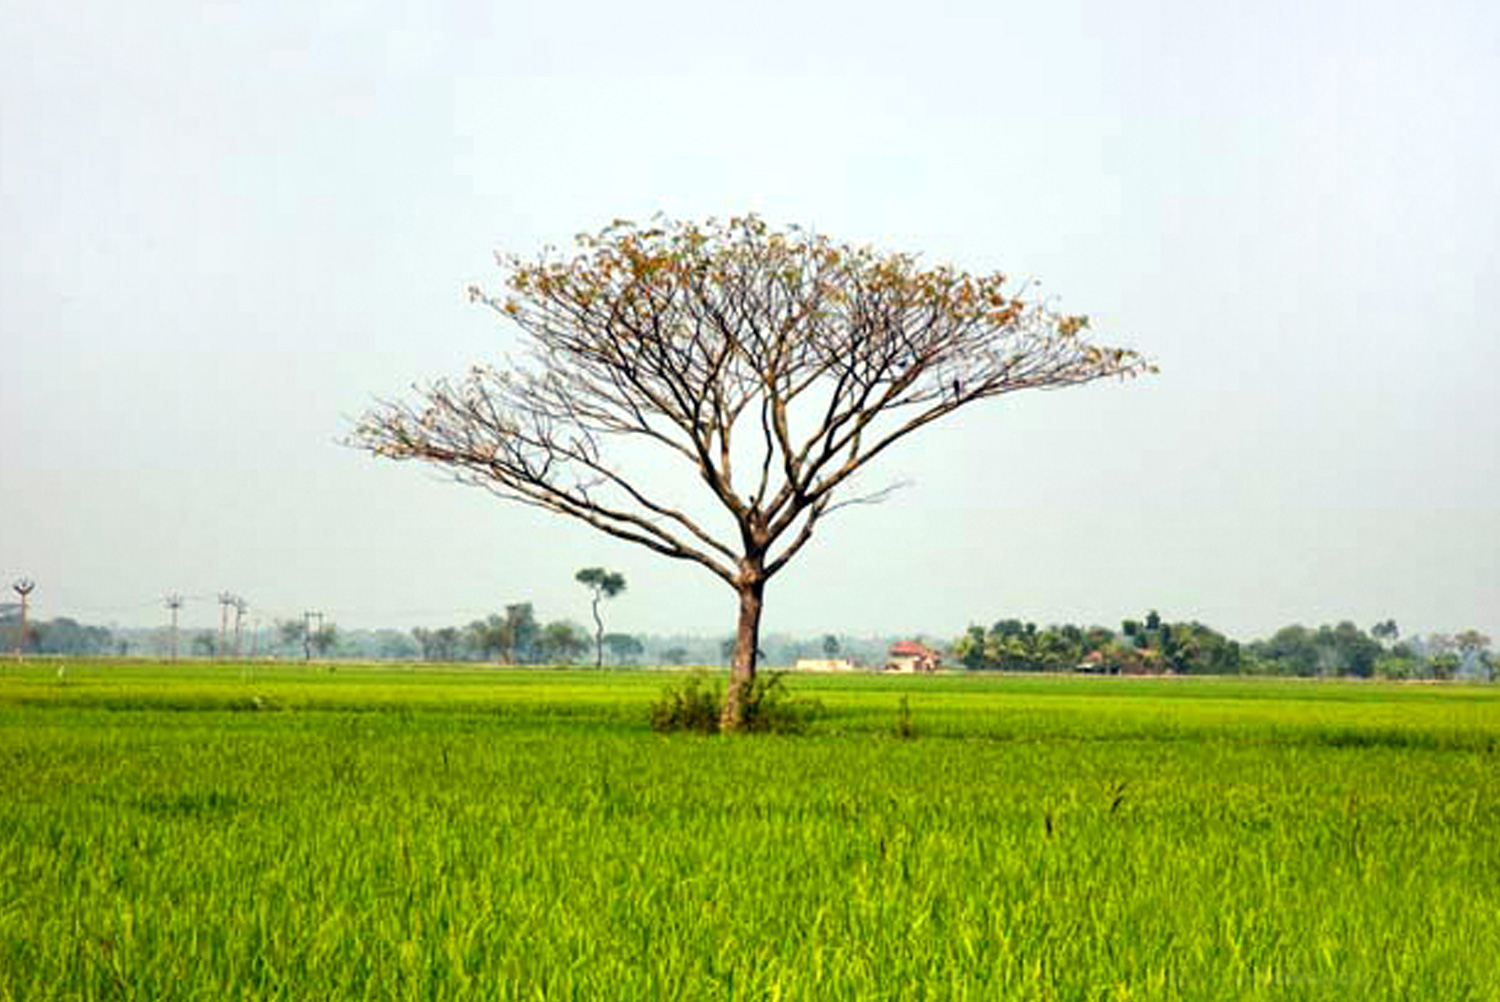 Exploring the lush greenery of rural India